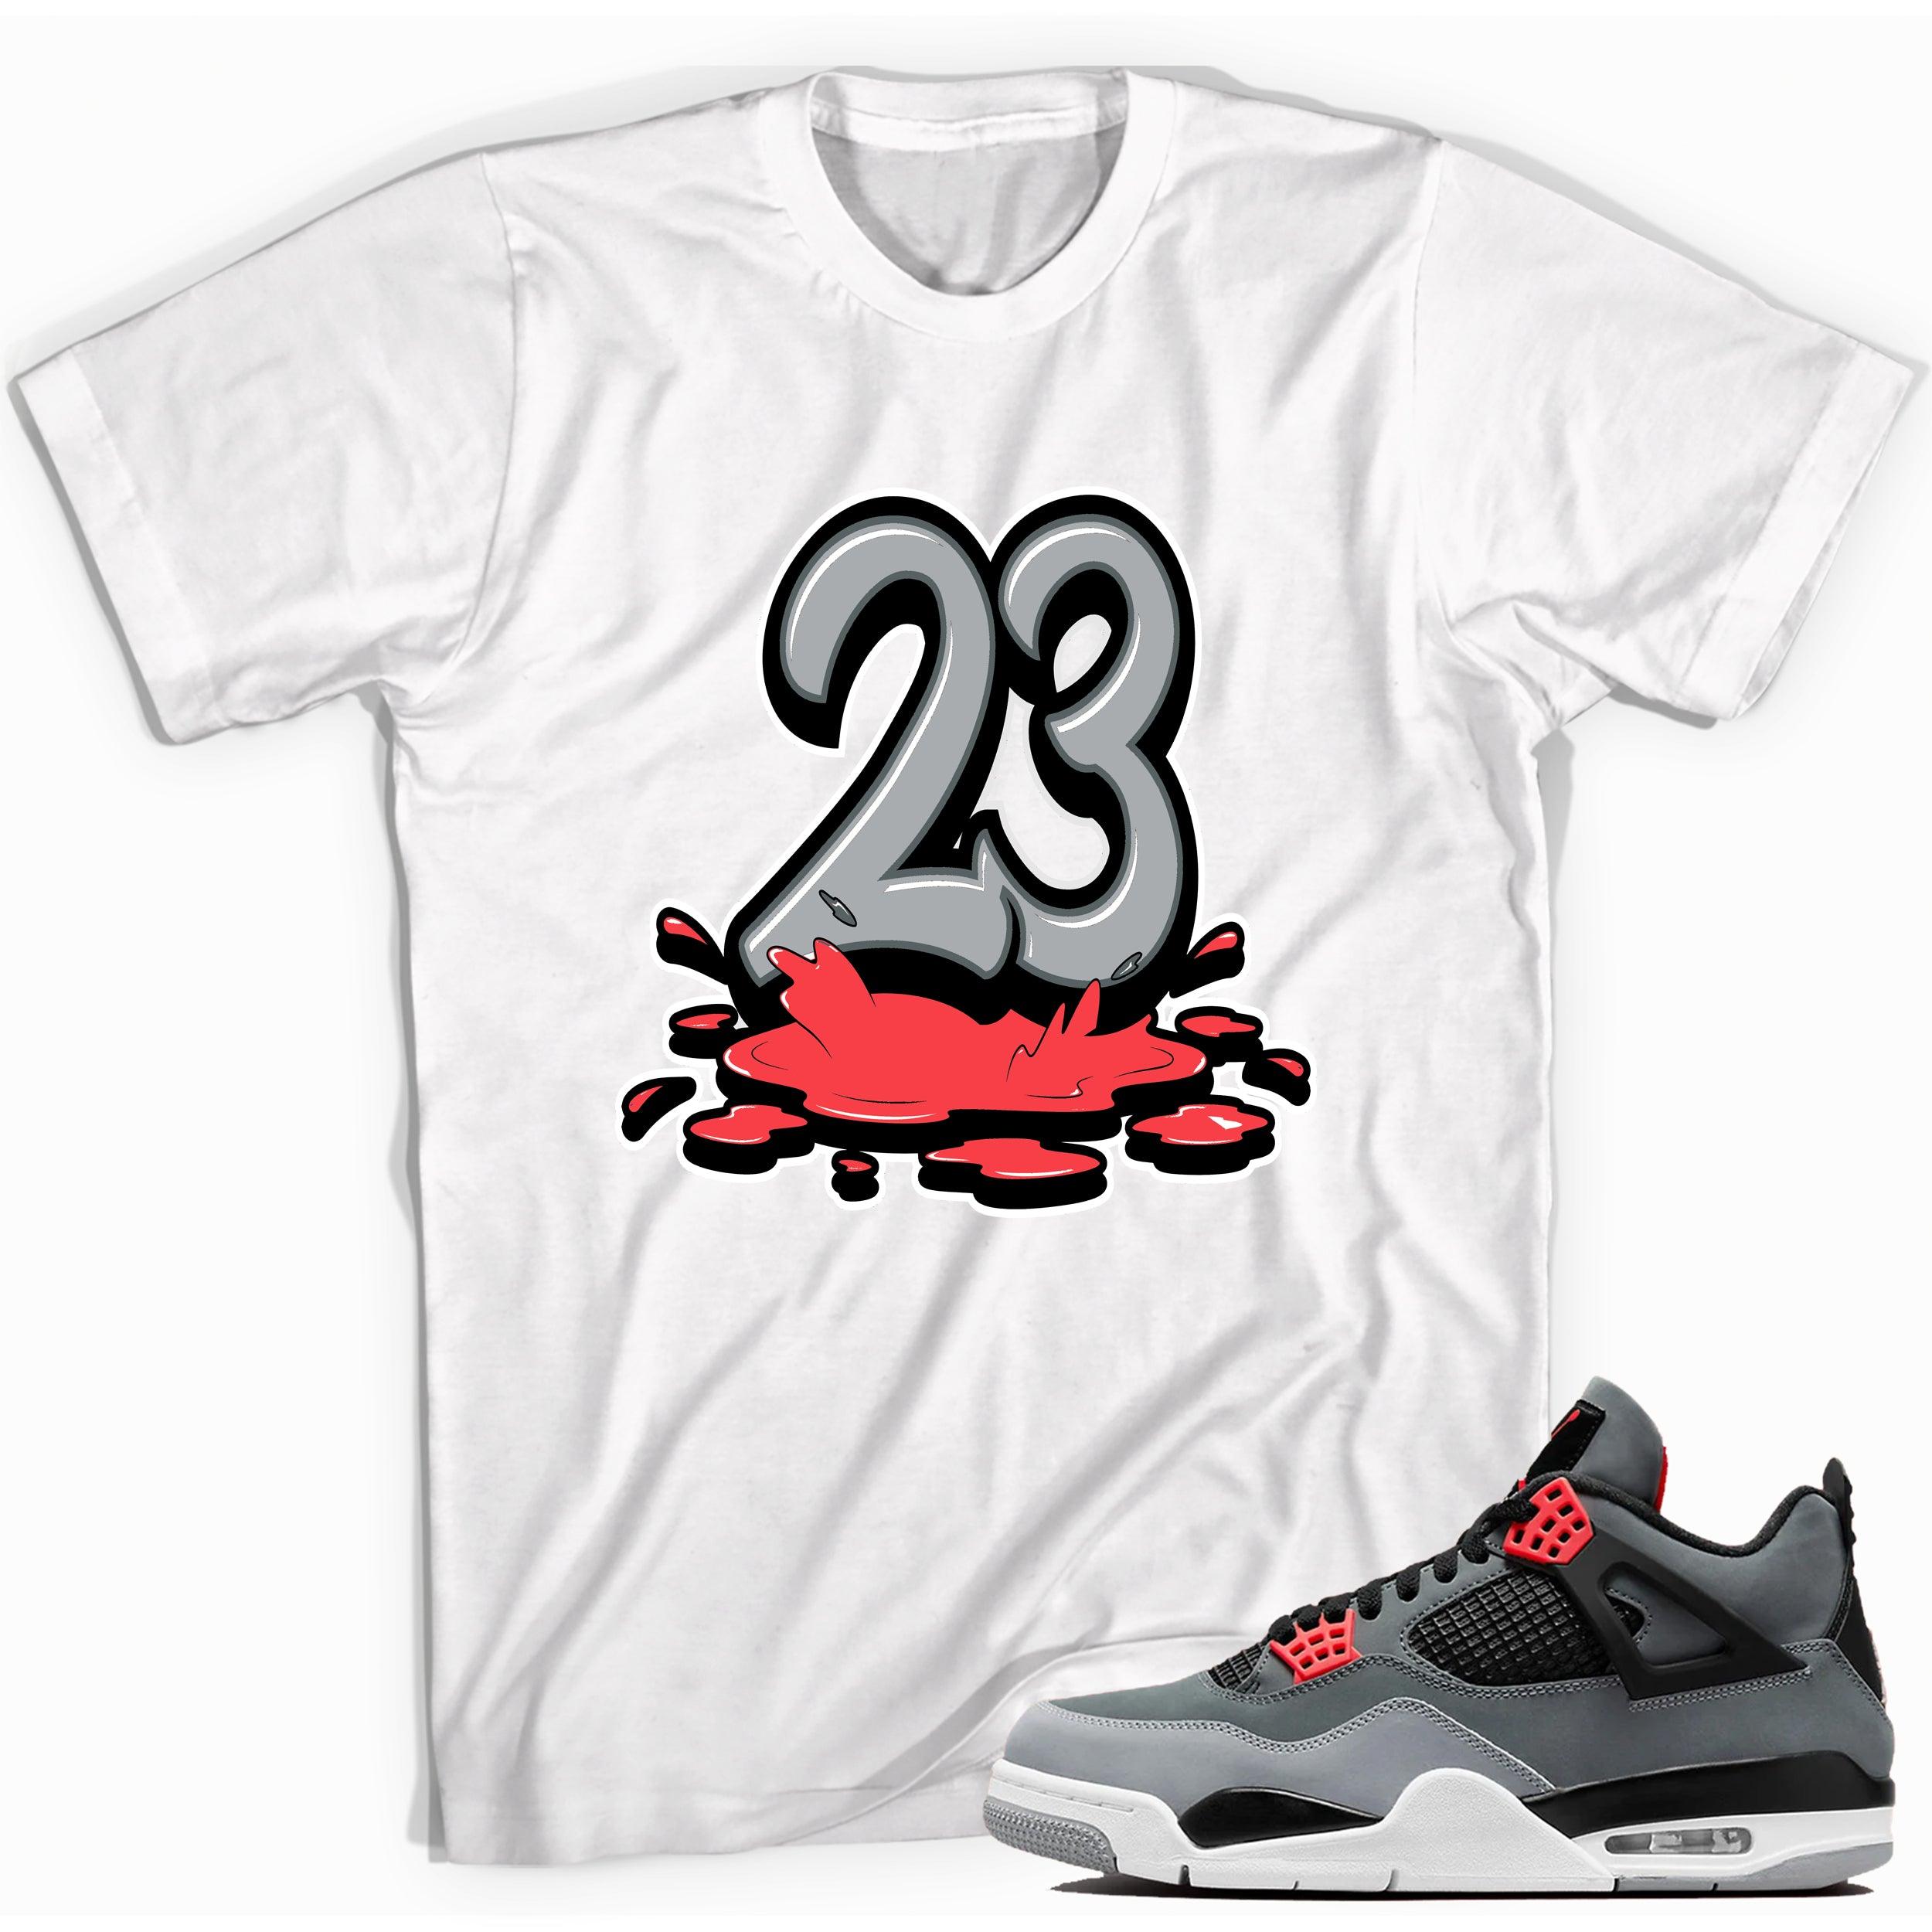 Number 23 Melting Shirt Air Jordan 4s Infrared photo